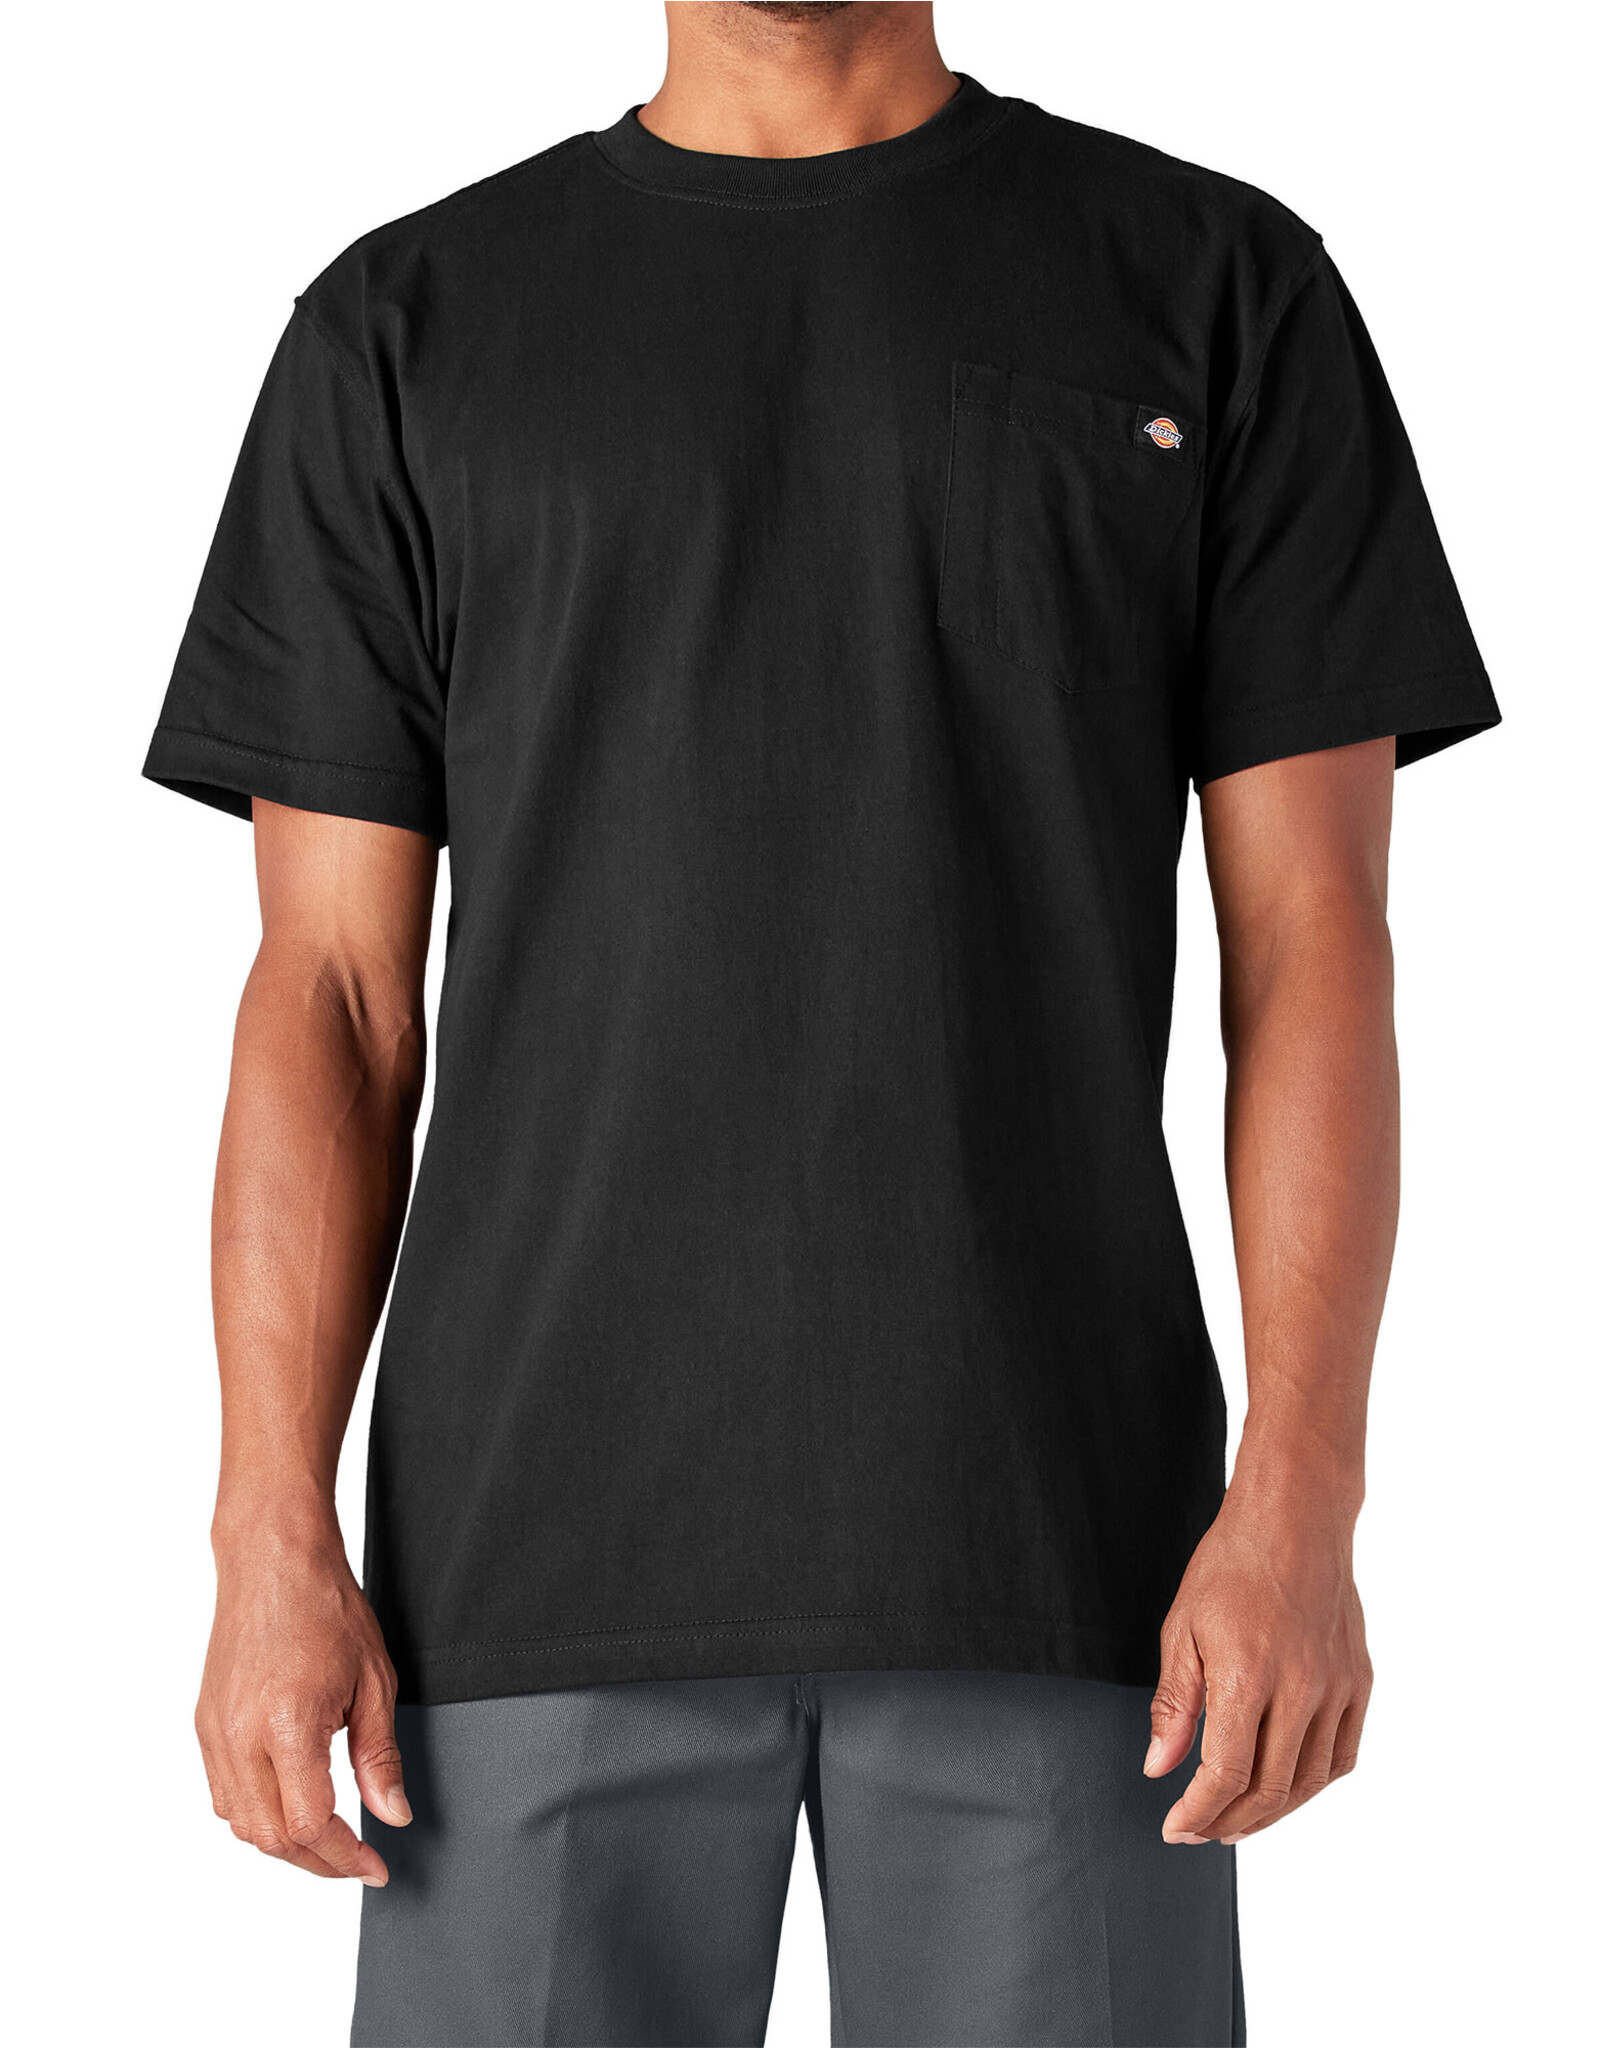 DICKIES Heavyweight Short Sleeve Pocket T-Shirt Black - WS450BK